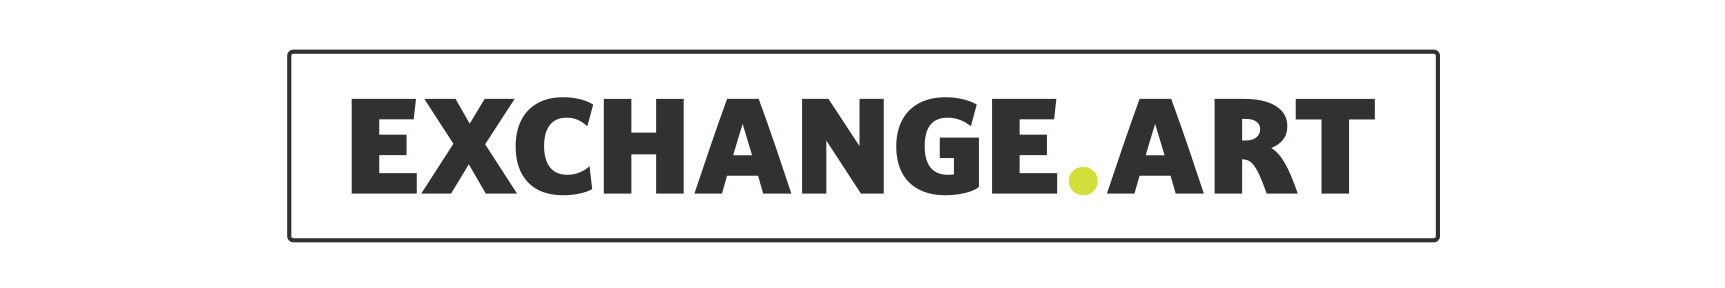 Exchange. Art Logo